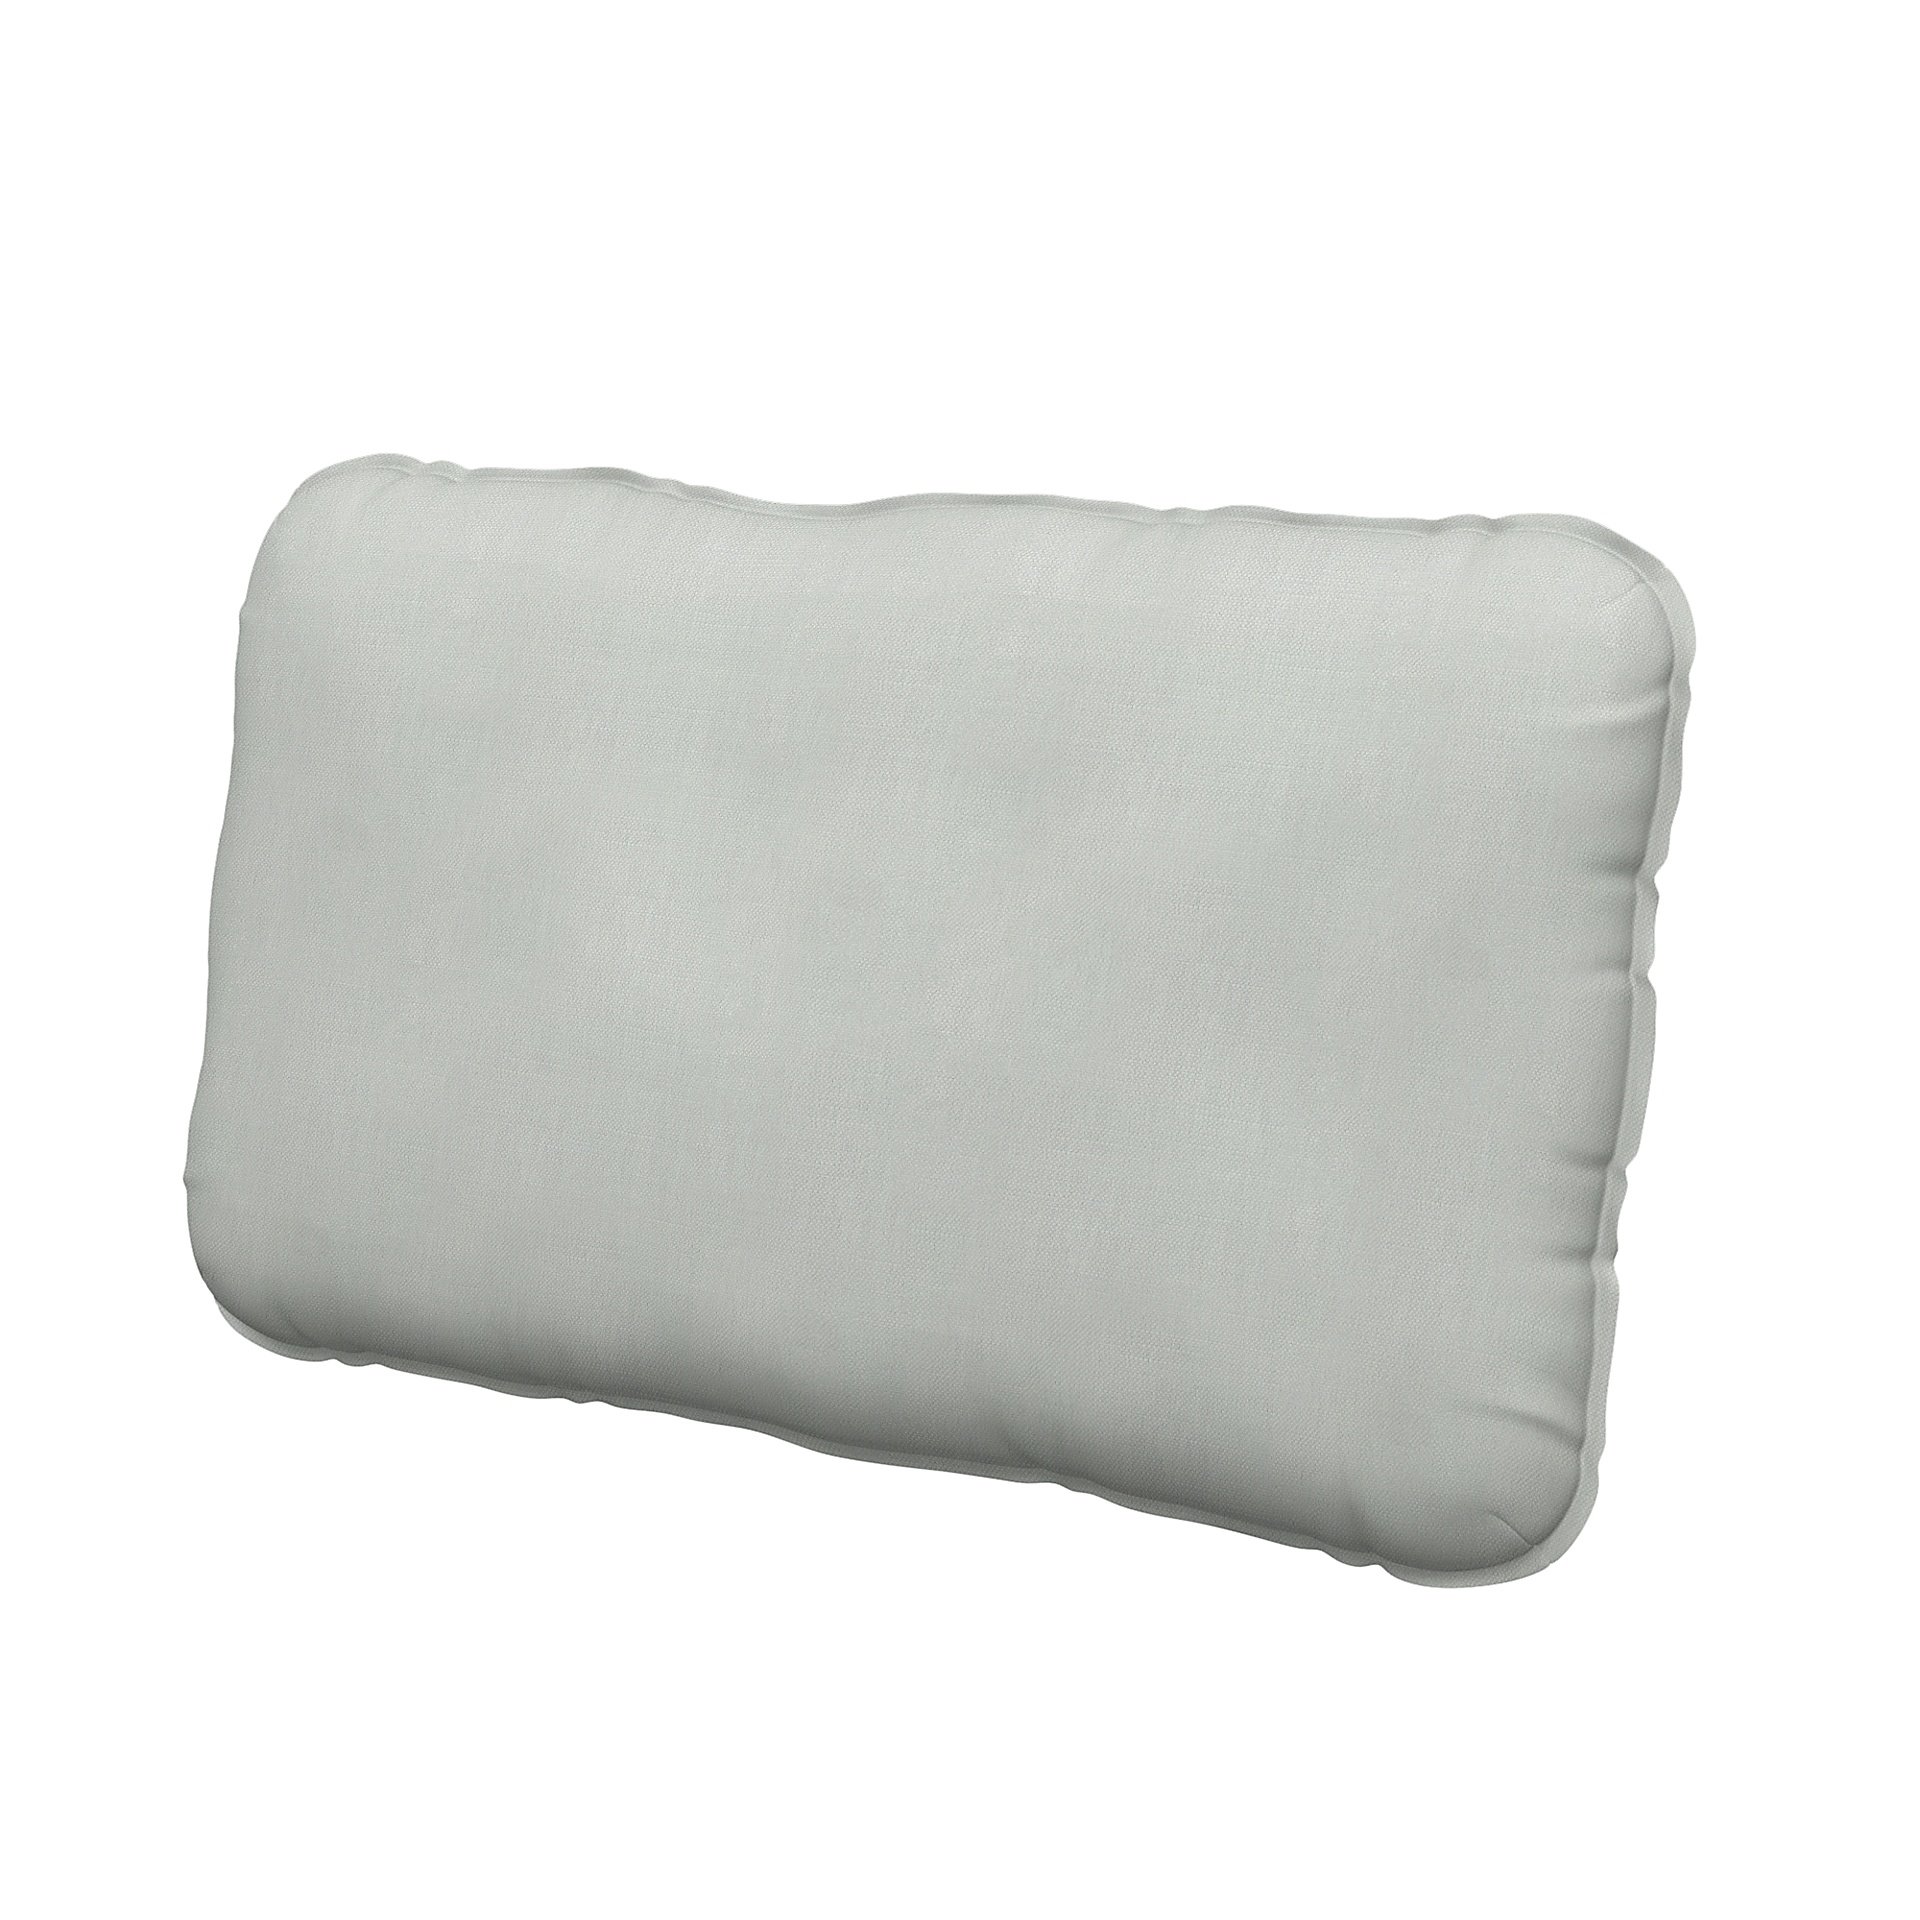 IKEA - Vallentuna back cushion cover 40x75cm, Silver Grey, Linen - Bemz